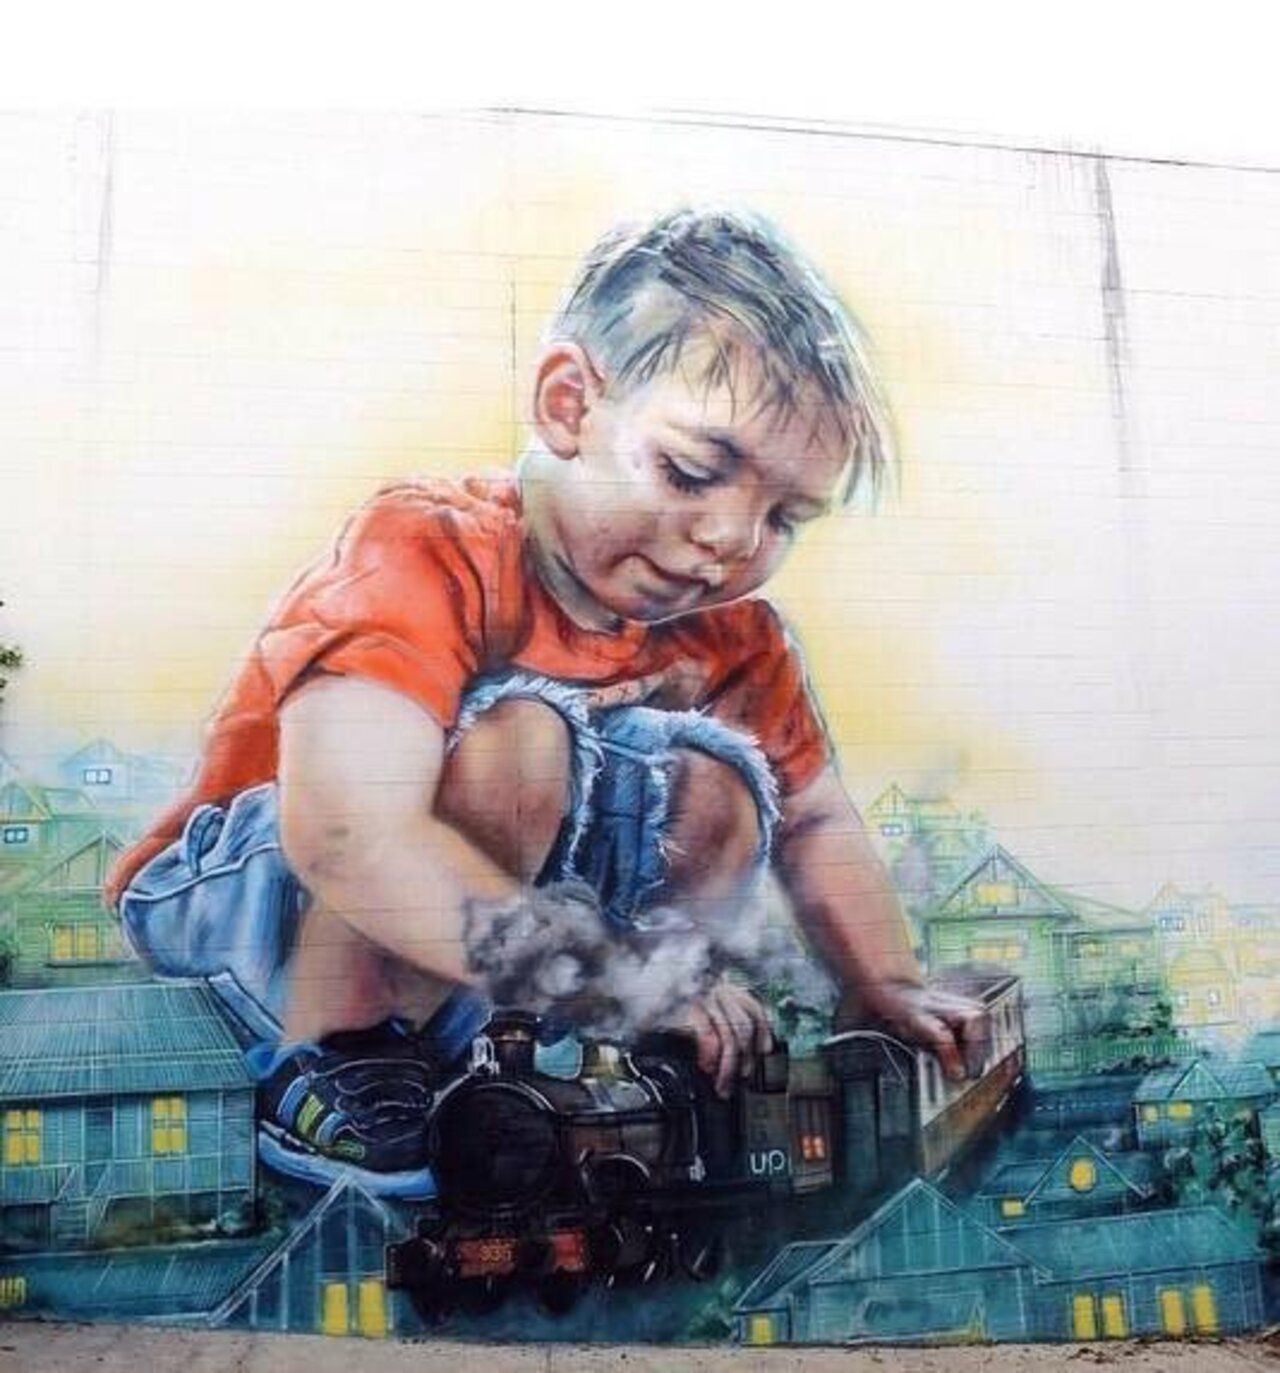 #mural by Gus Eagleton #Brisbane #Australia #Streetart #urbanart #graffiti #art https://t.co/xM2rilIYBp